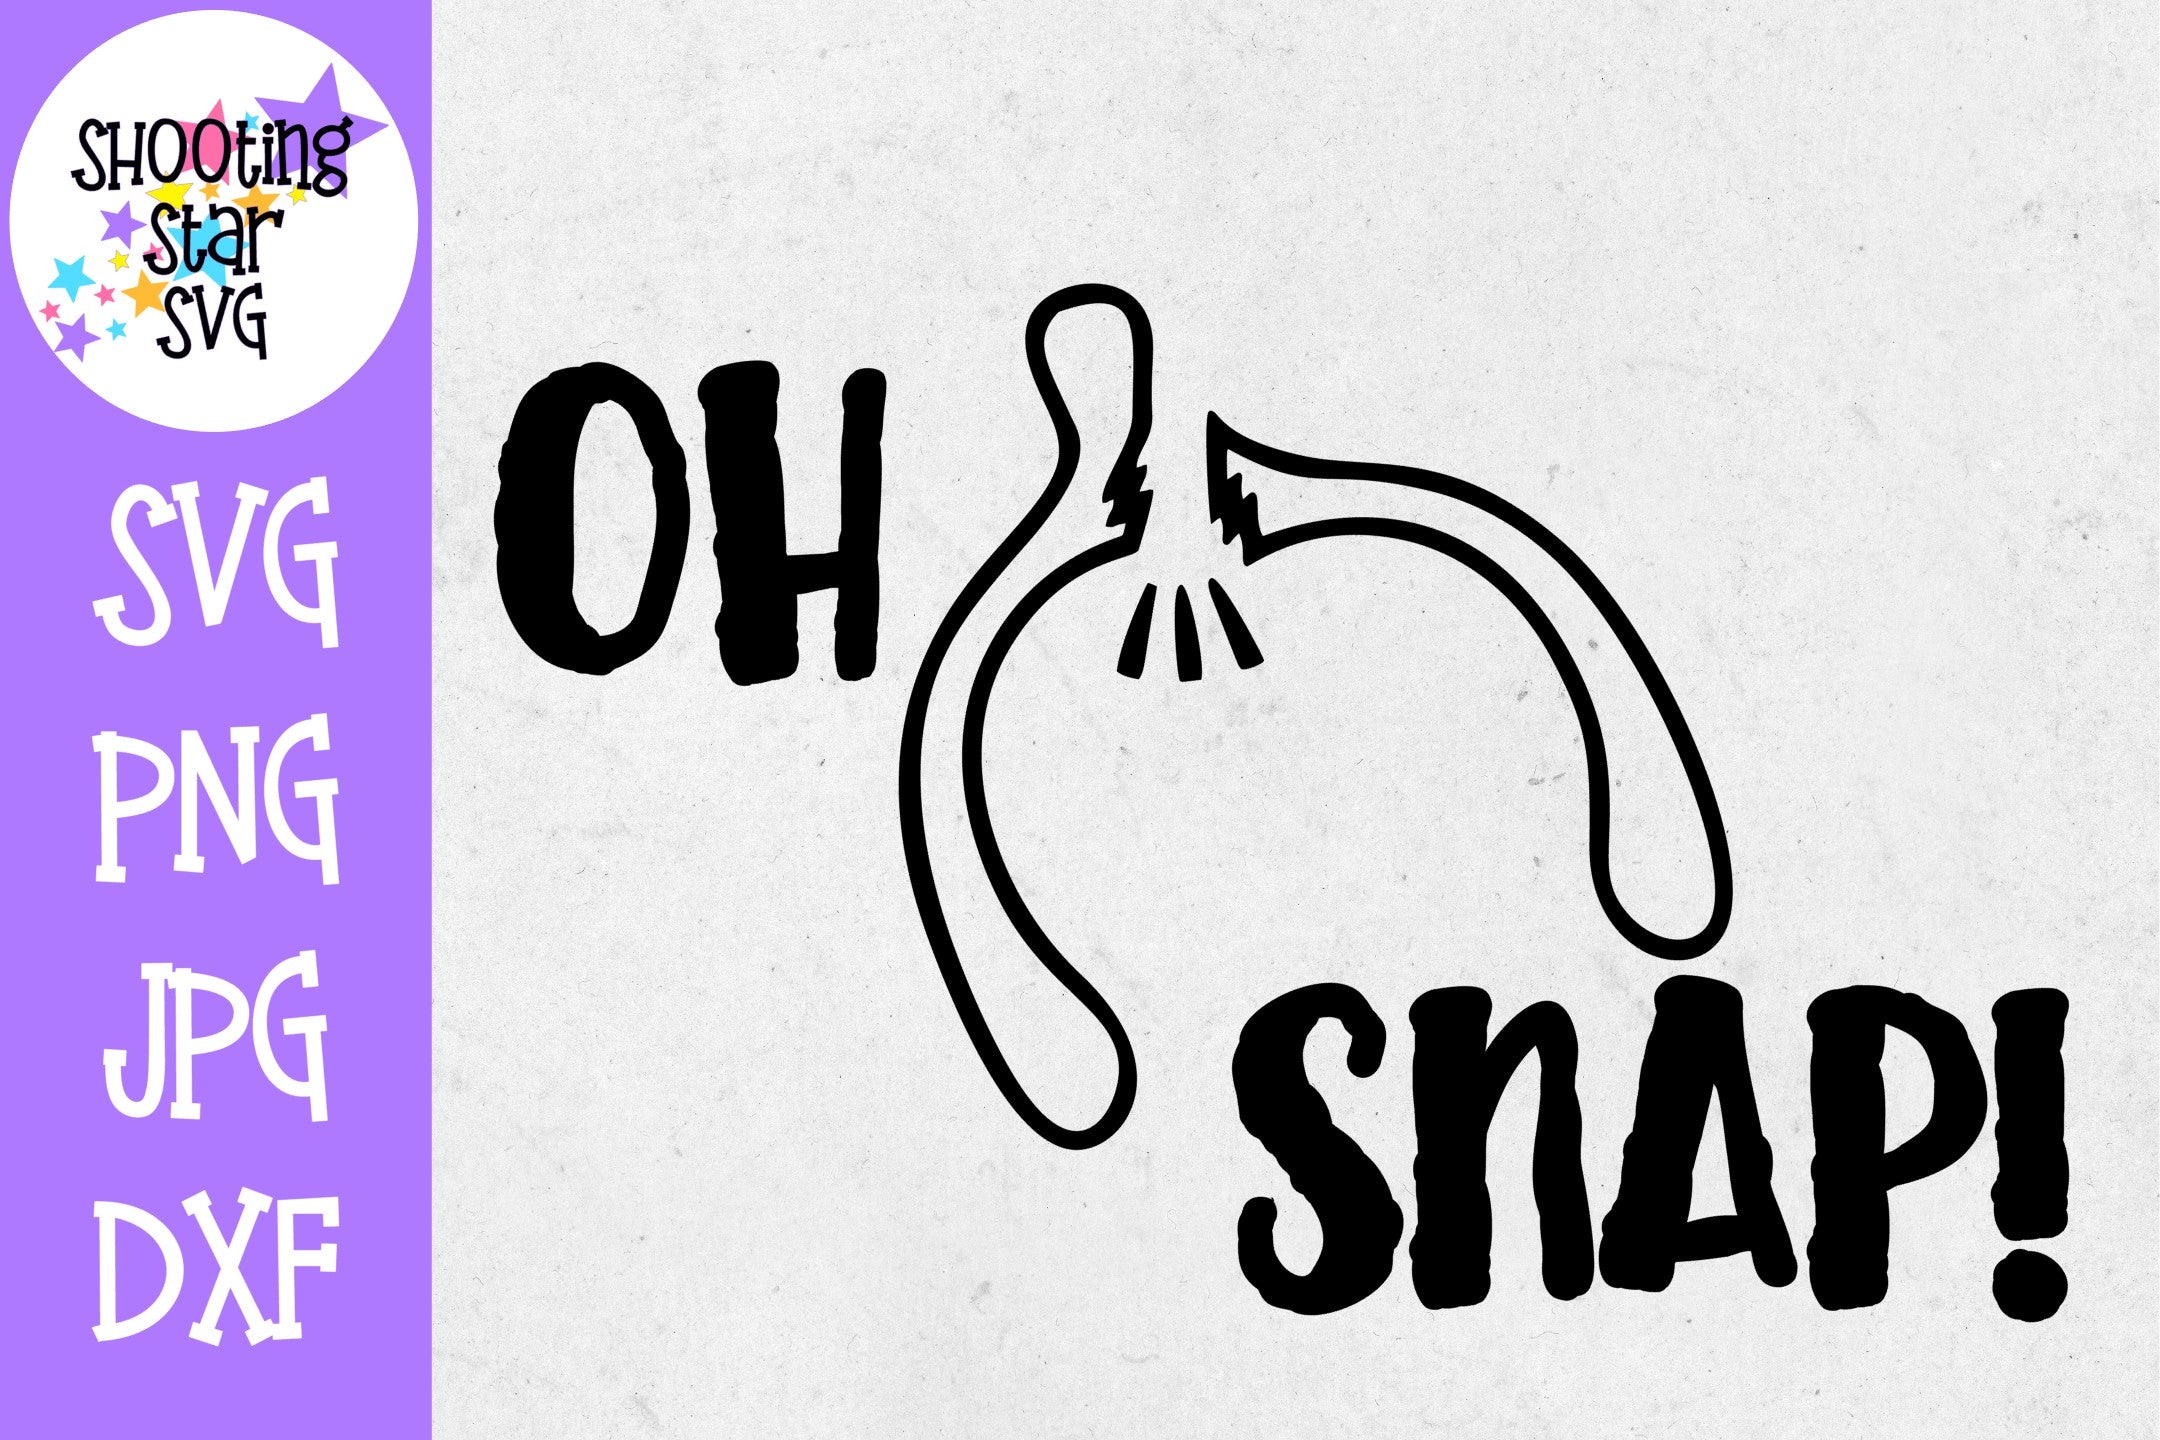 Oh snap Wishbone SVG - funny thanksgiving SVG 